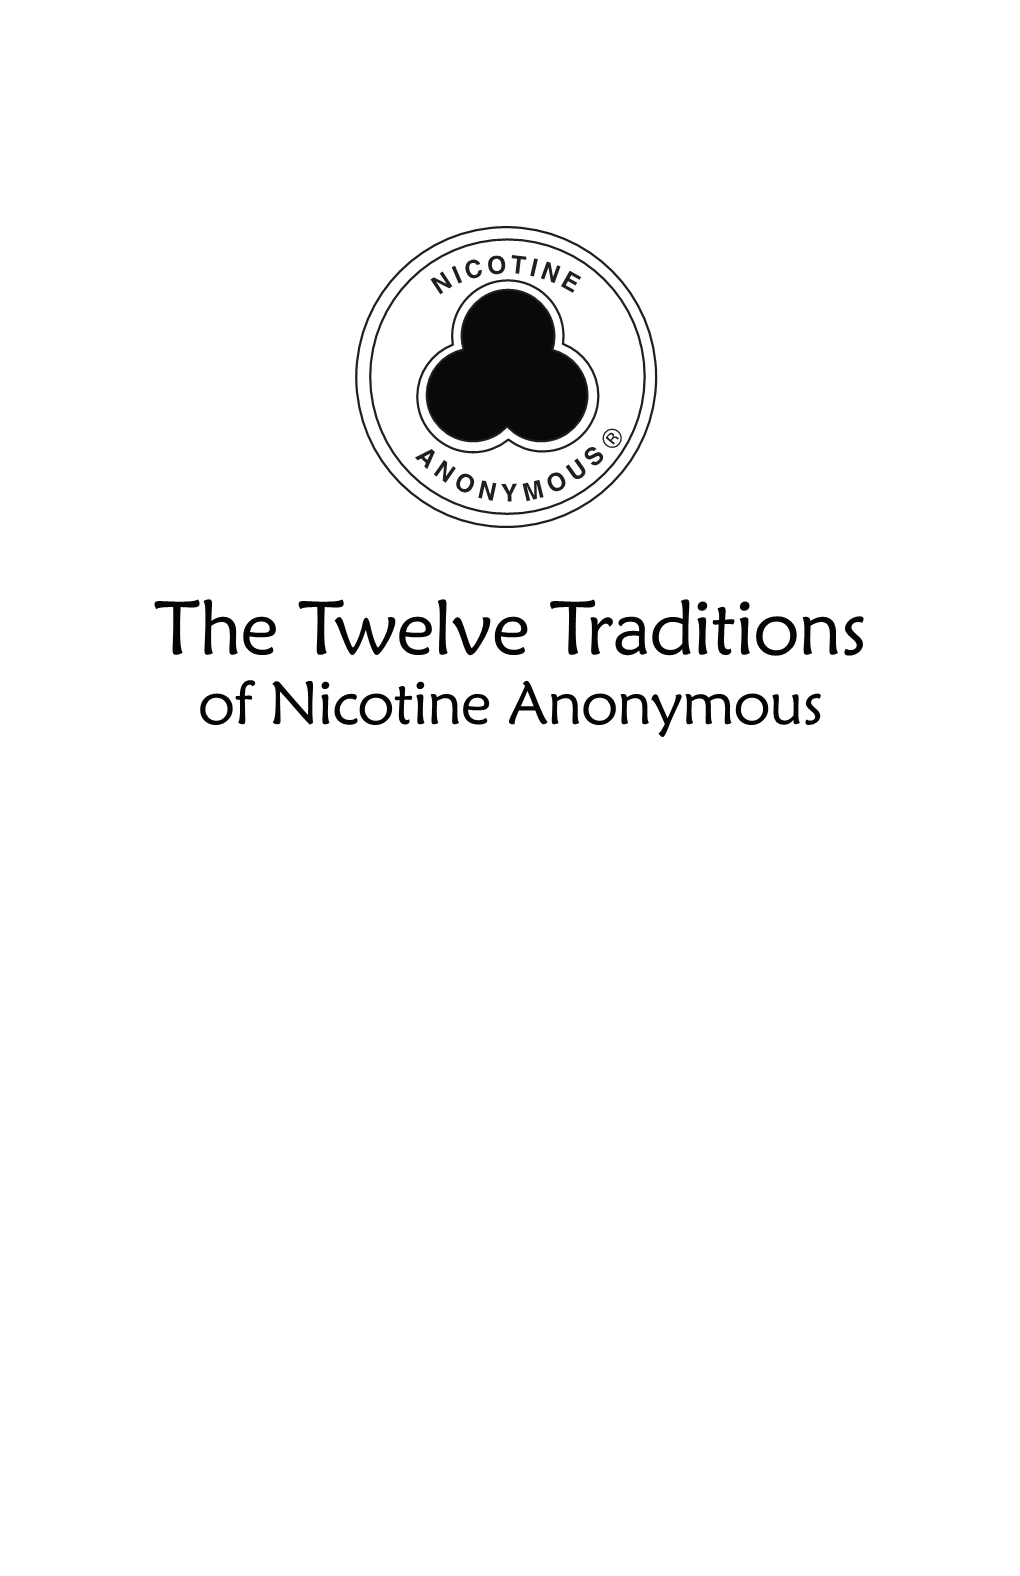 The Twelve Traditions of Nicotine Anonymous the Twelve Traditions * of Nicotine Anonymous